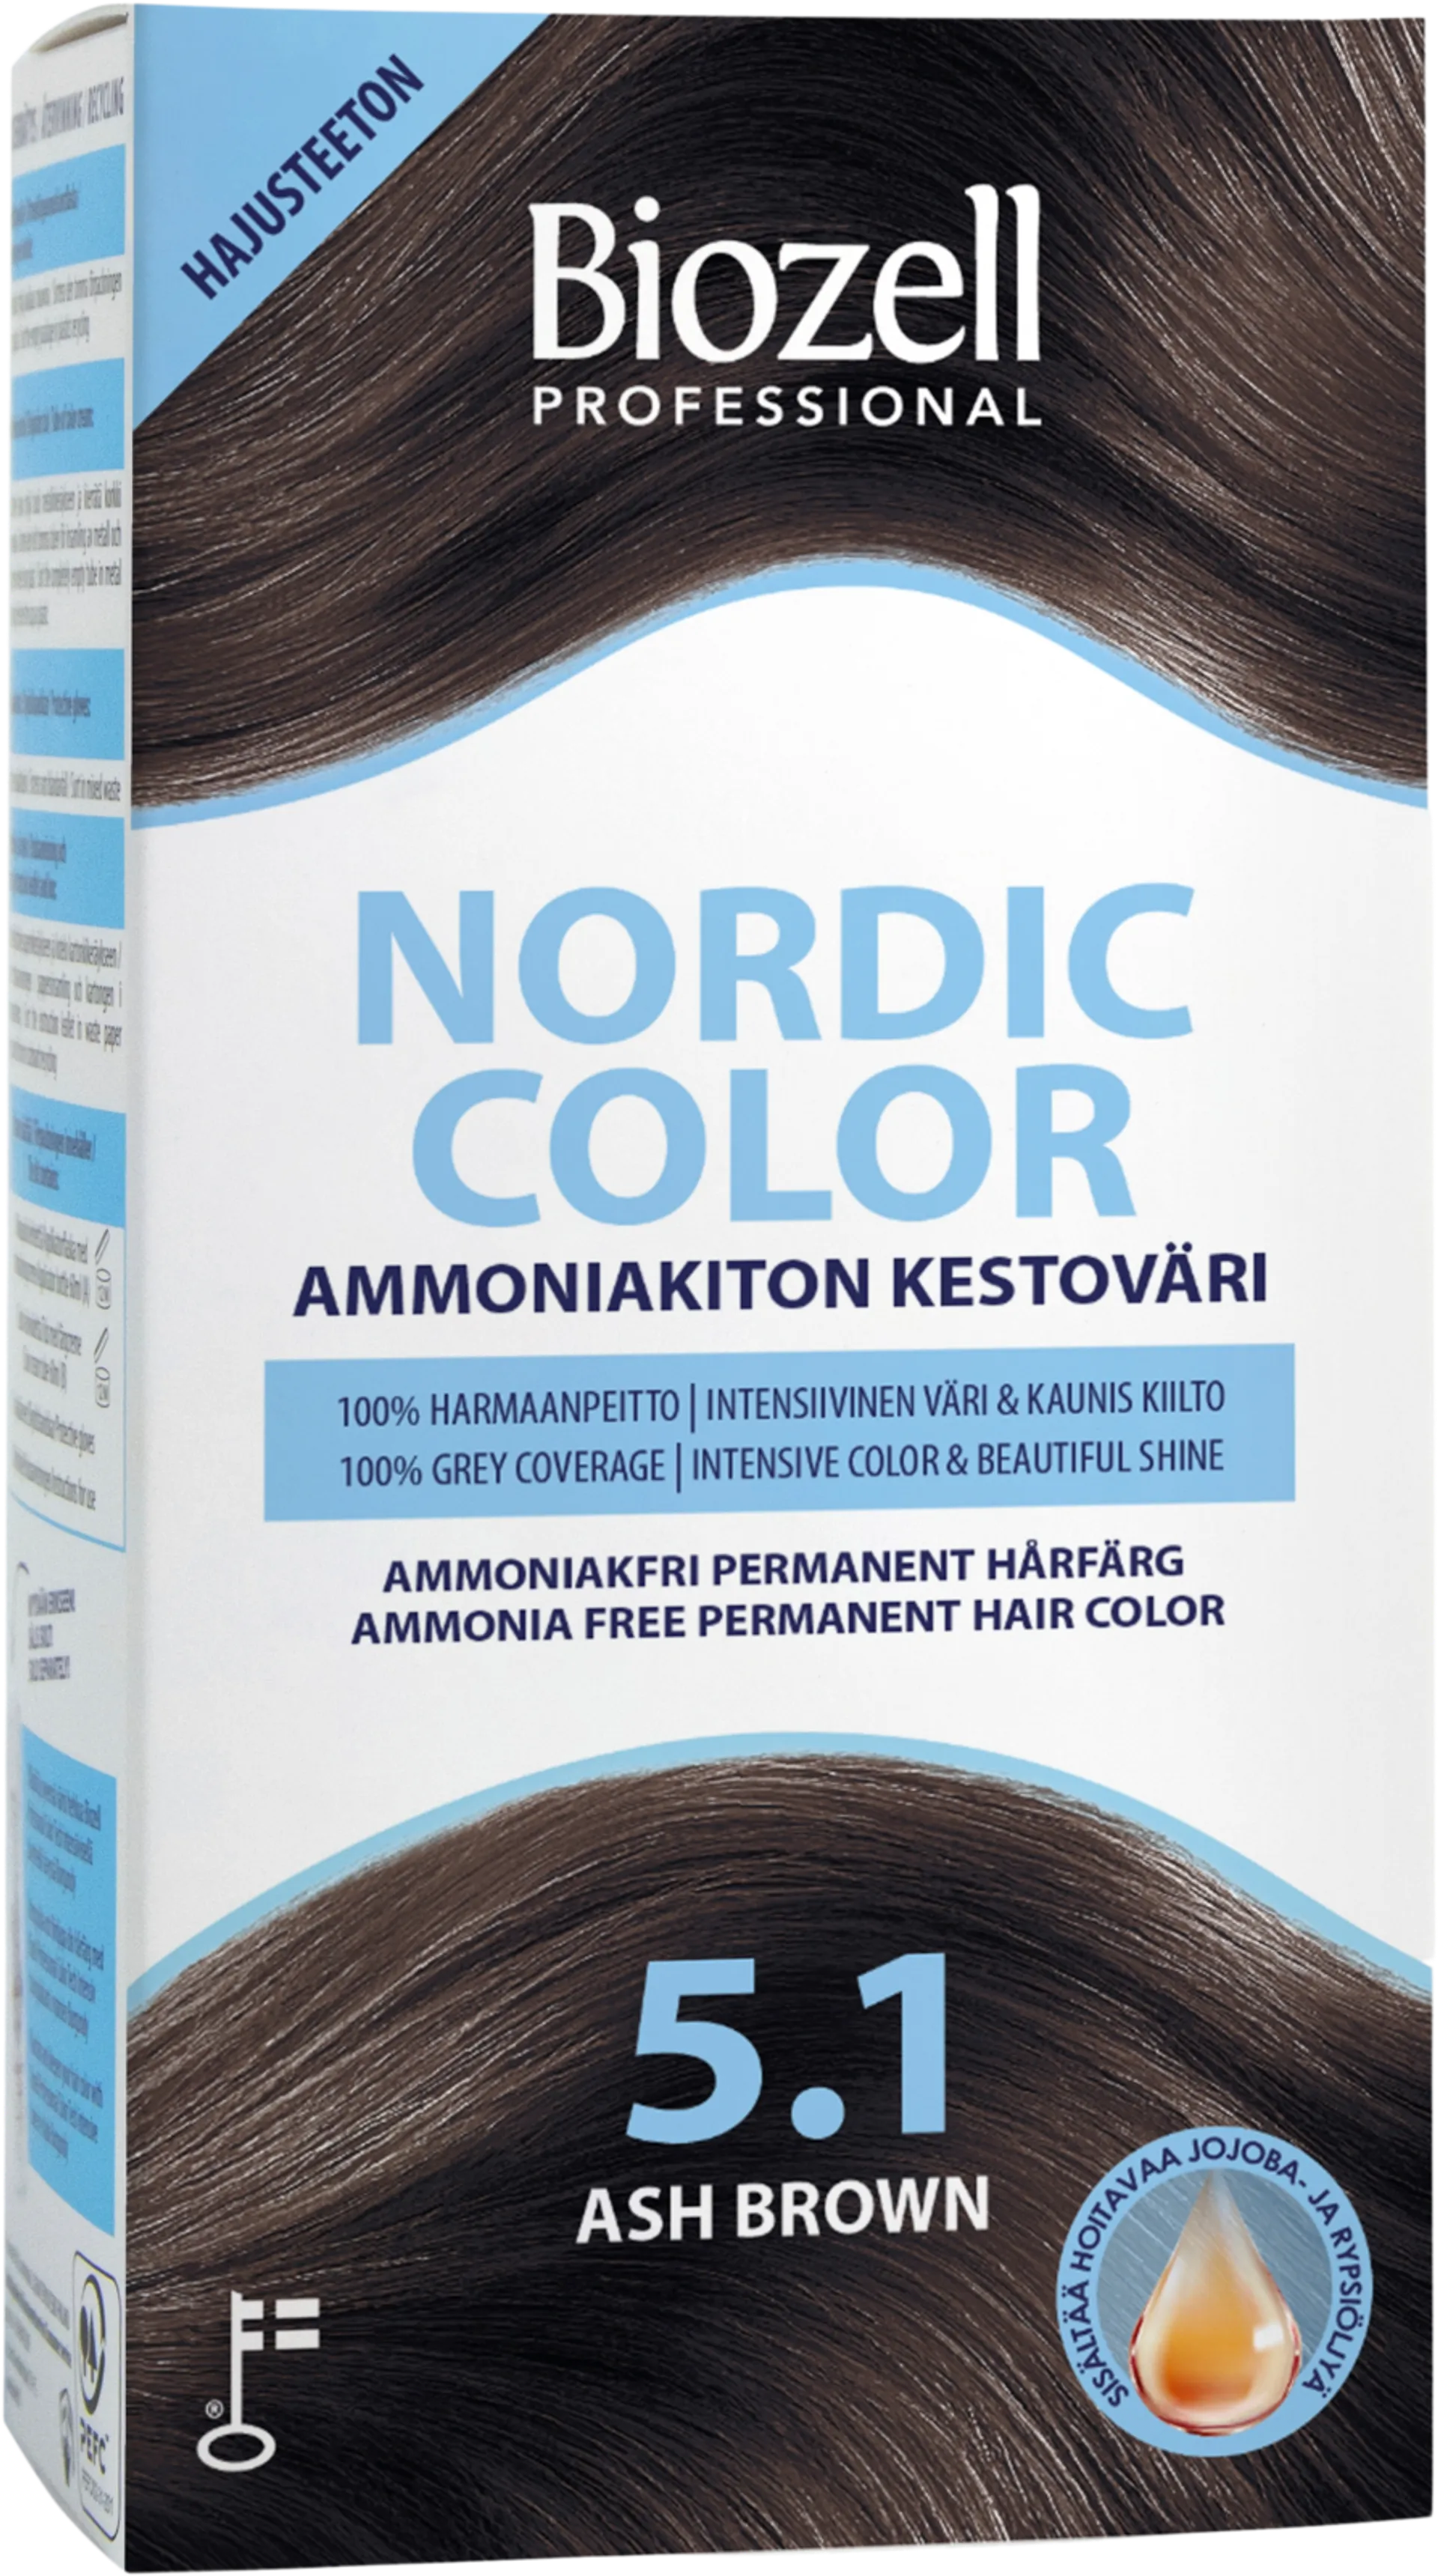 Biozell Professional Nordic Color ammoniakiton kestoväri Ash Brown 5.1 2x60ml